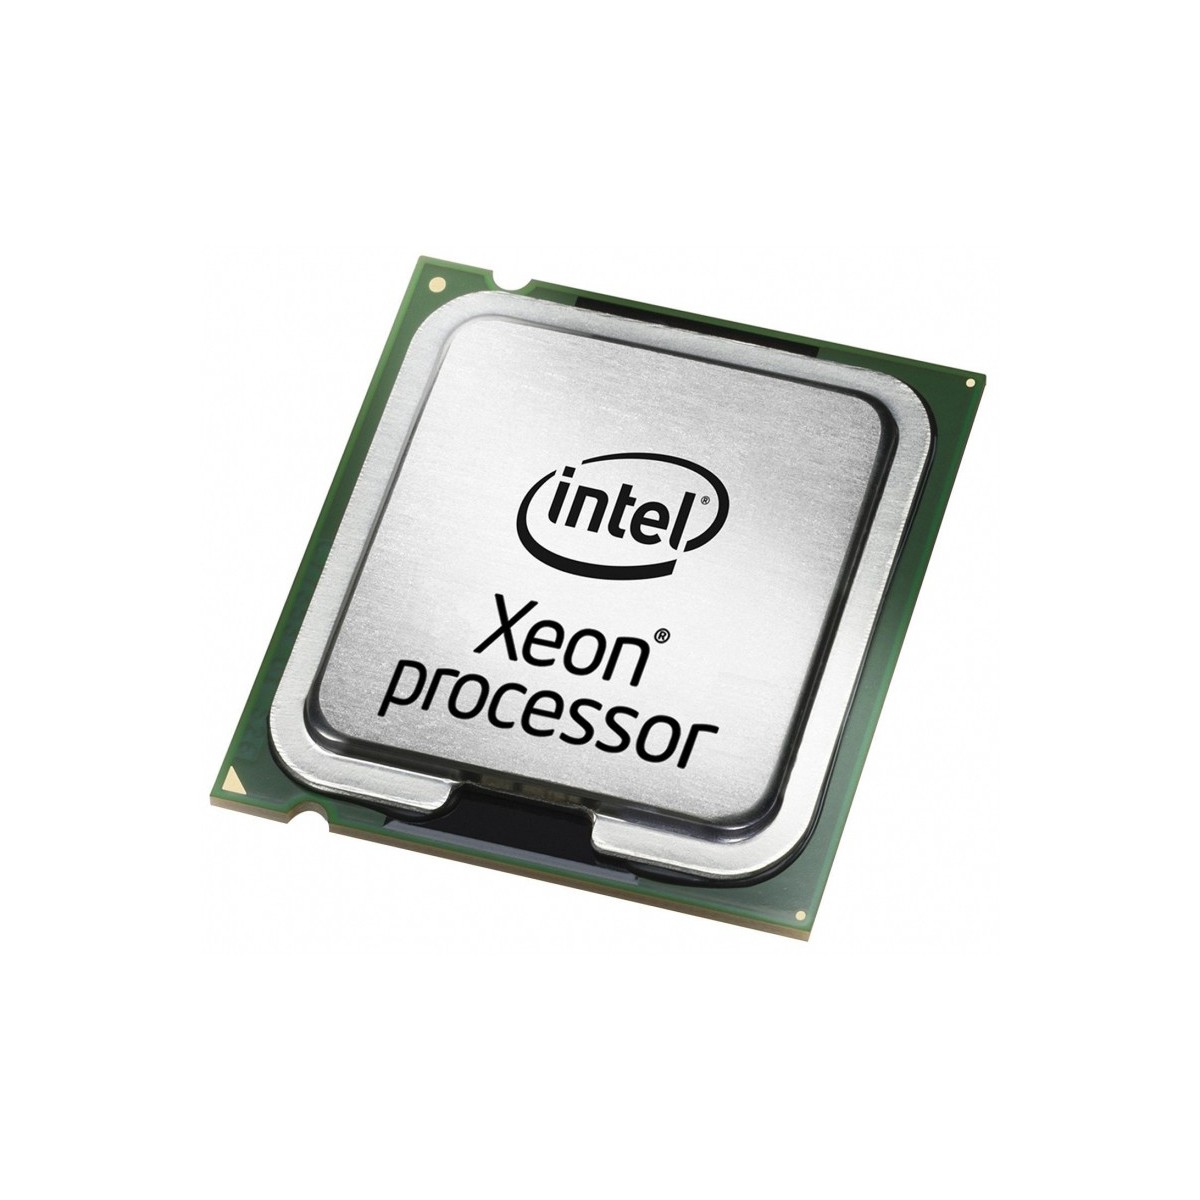 HPE Xeon E5430 Xeon 2.66 GHz - S771 Harpertown 45 nm - 80 W